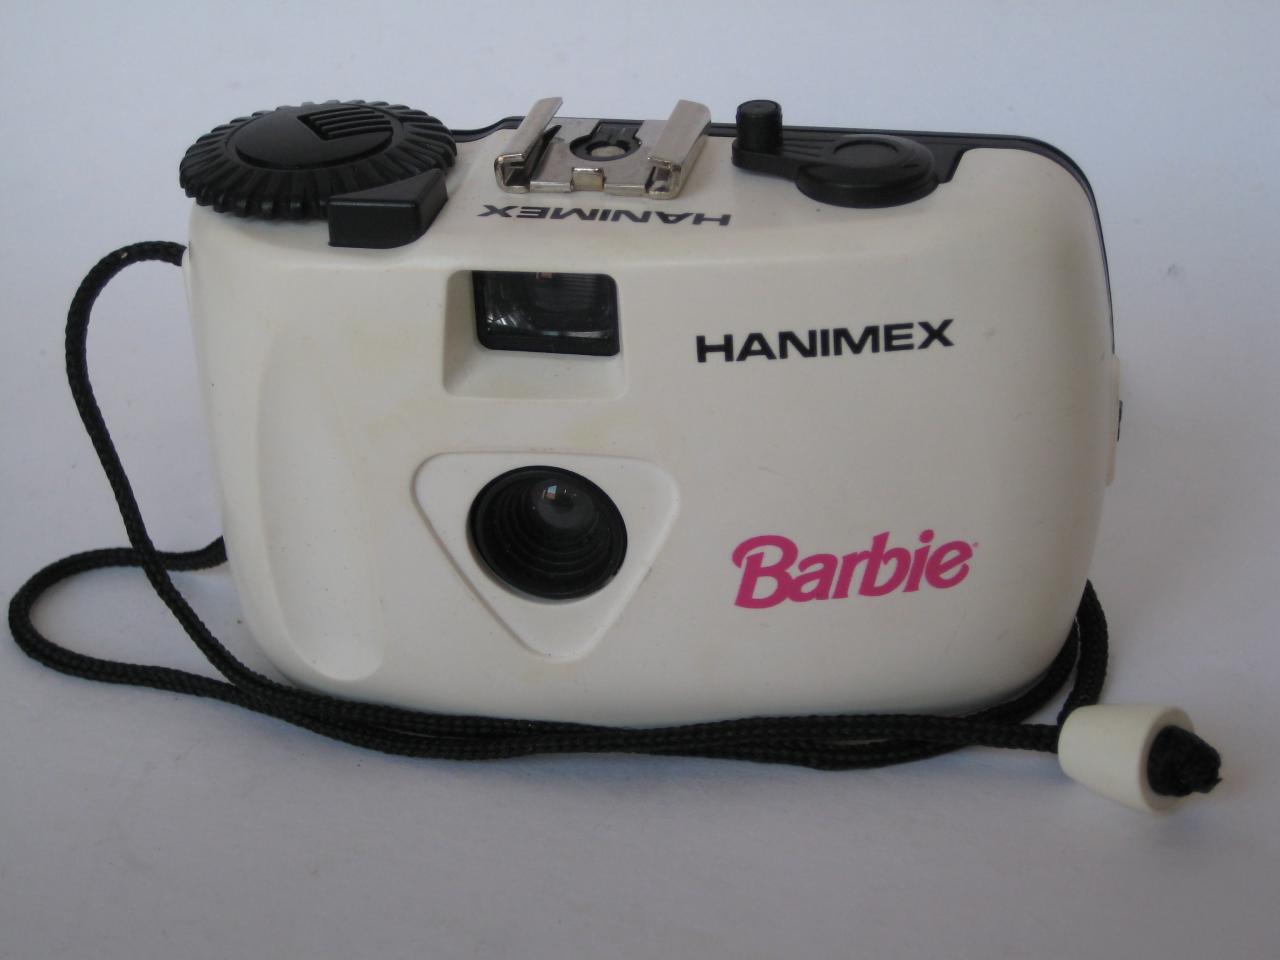 *Camera Hanimex Barbie*